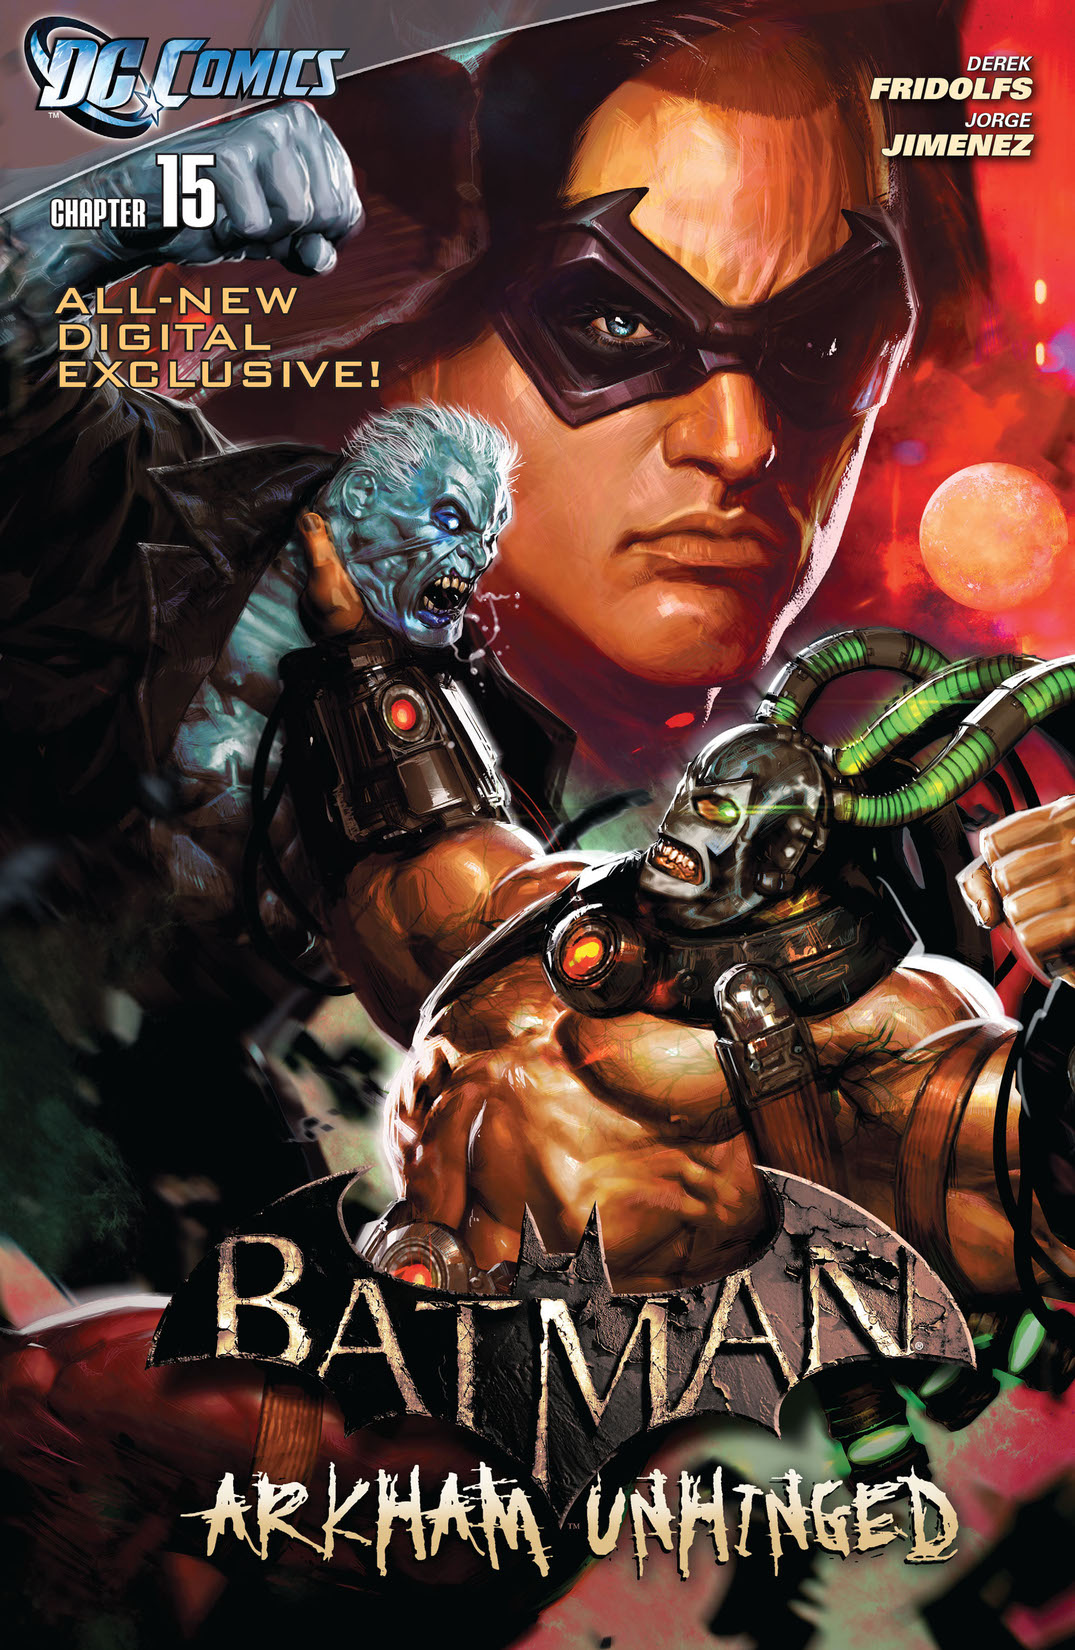 Batman: Arkham Unhinged #15 preview images